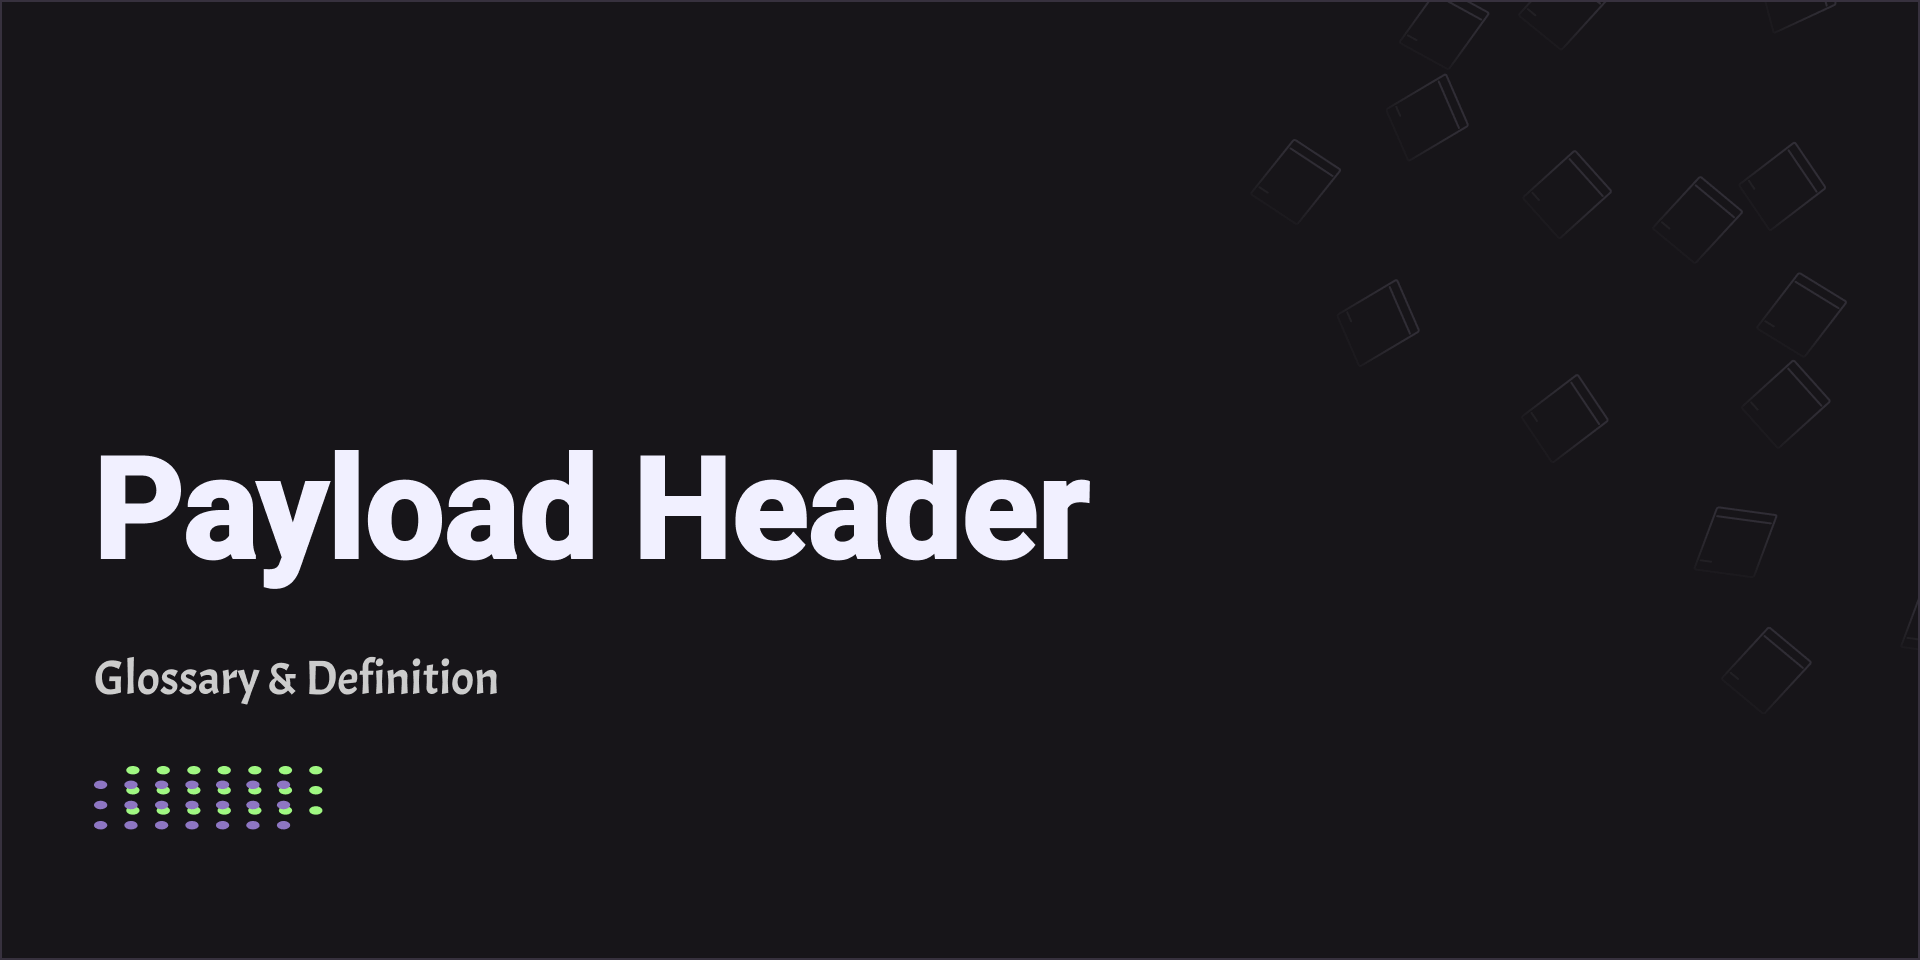 Payload Header